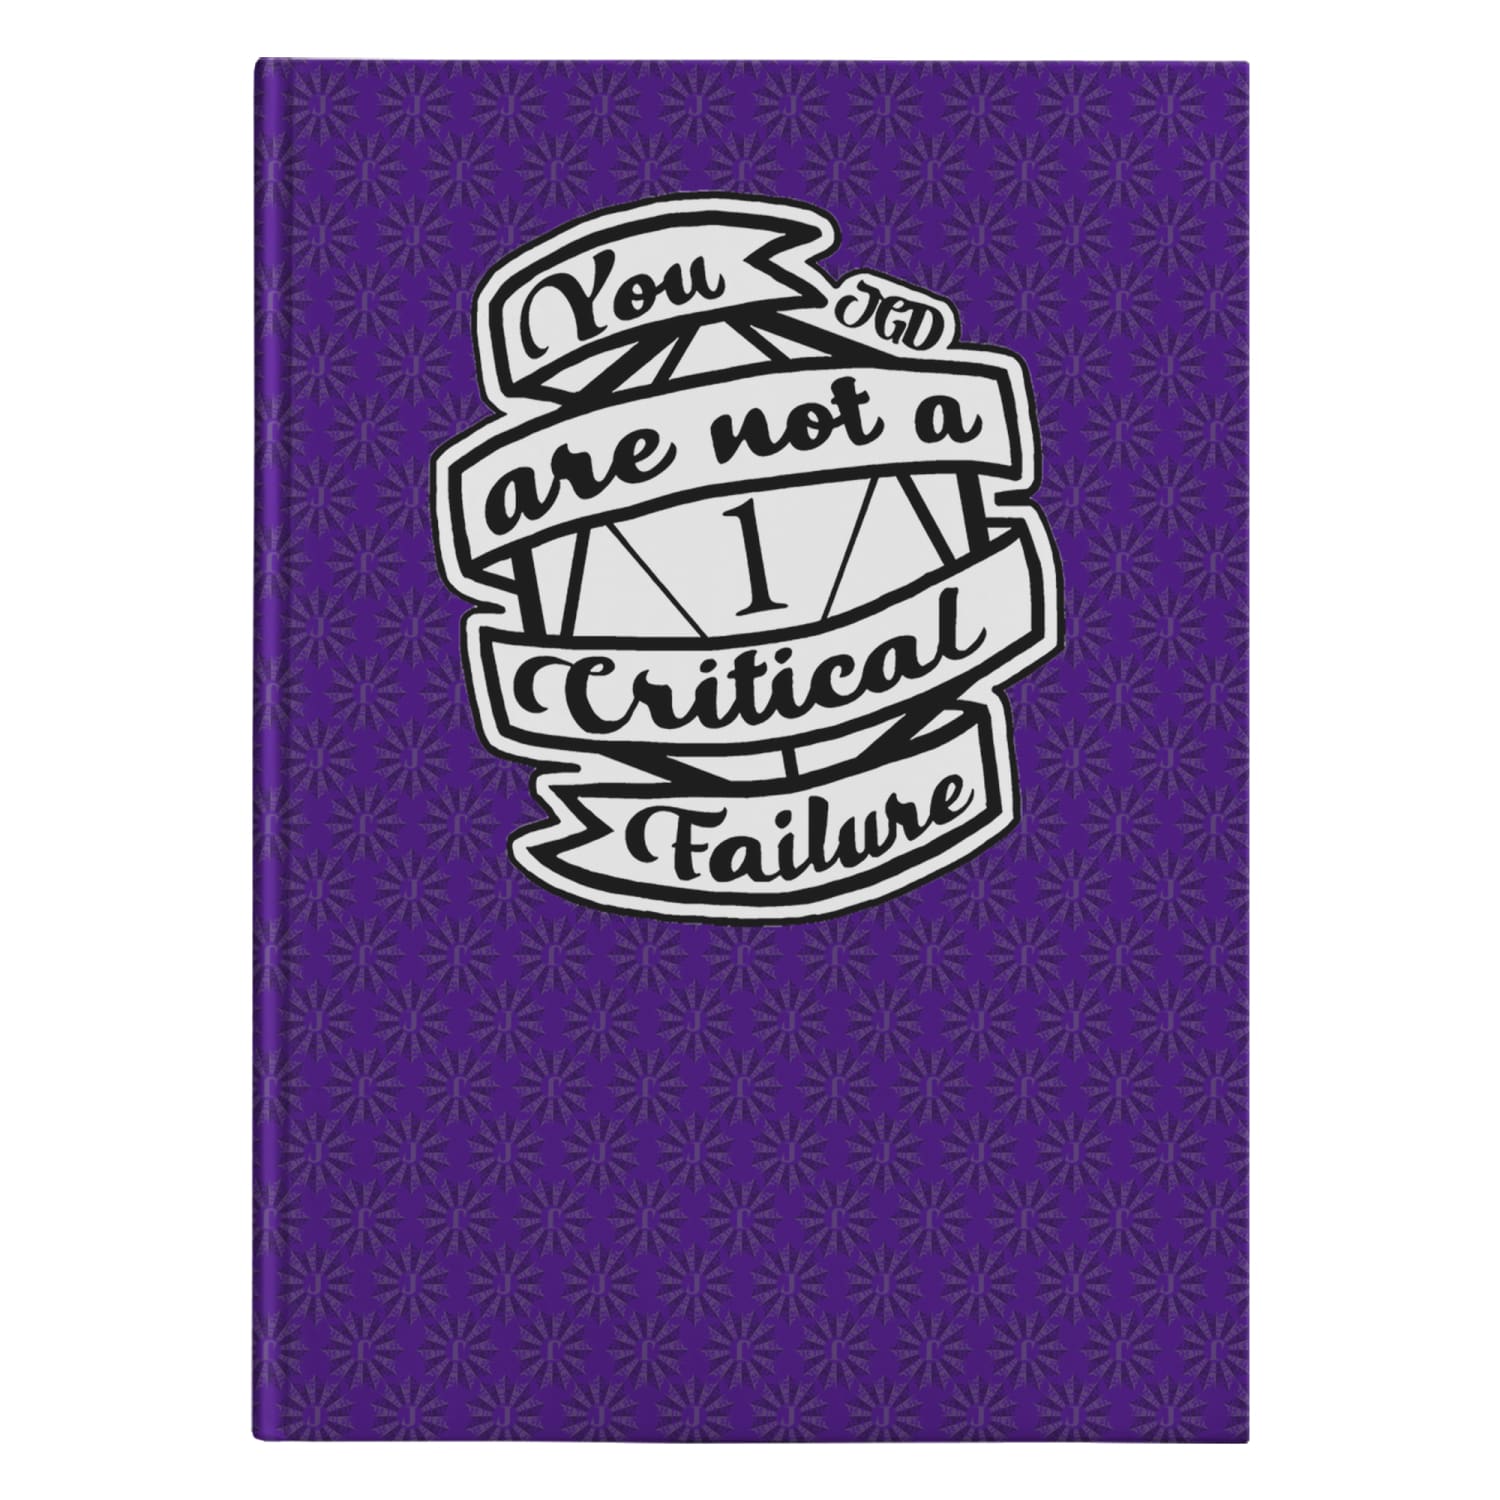 Jasper’s Game Day Hardcover Journal - Purple - Small (5.75 x 8) - Journals